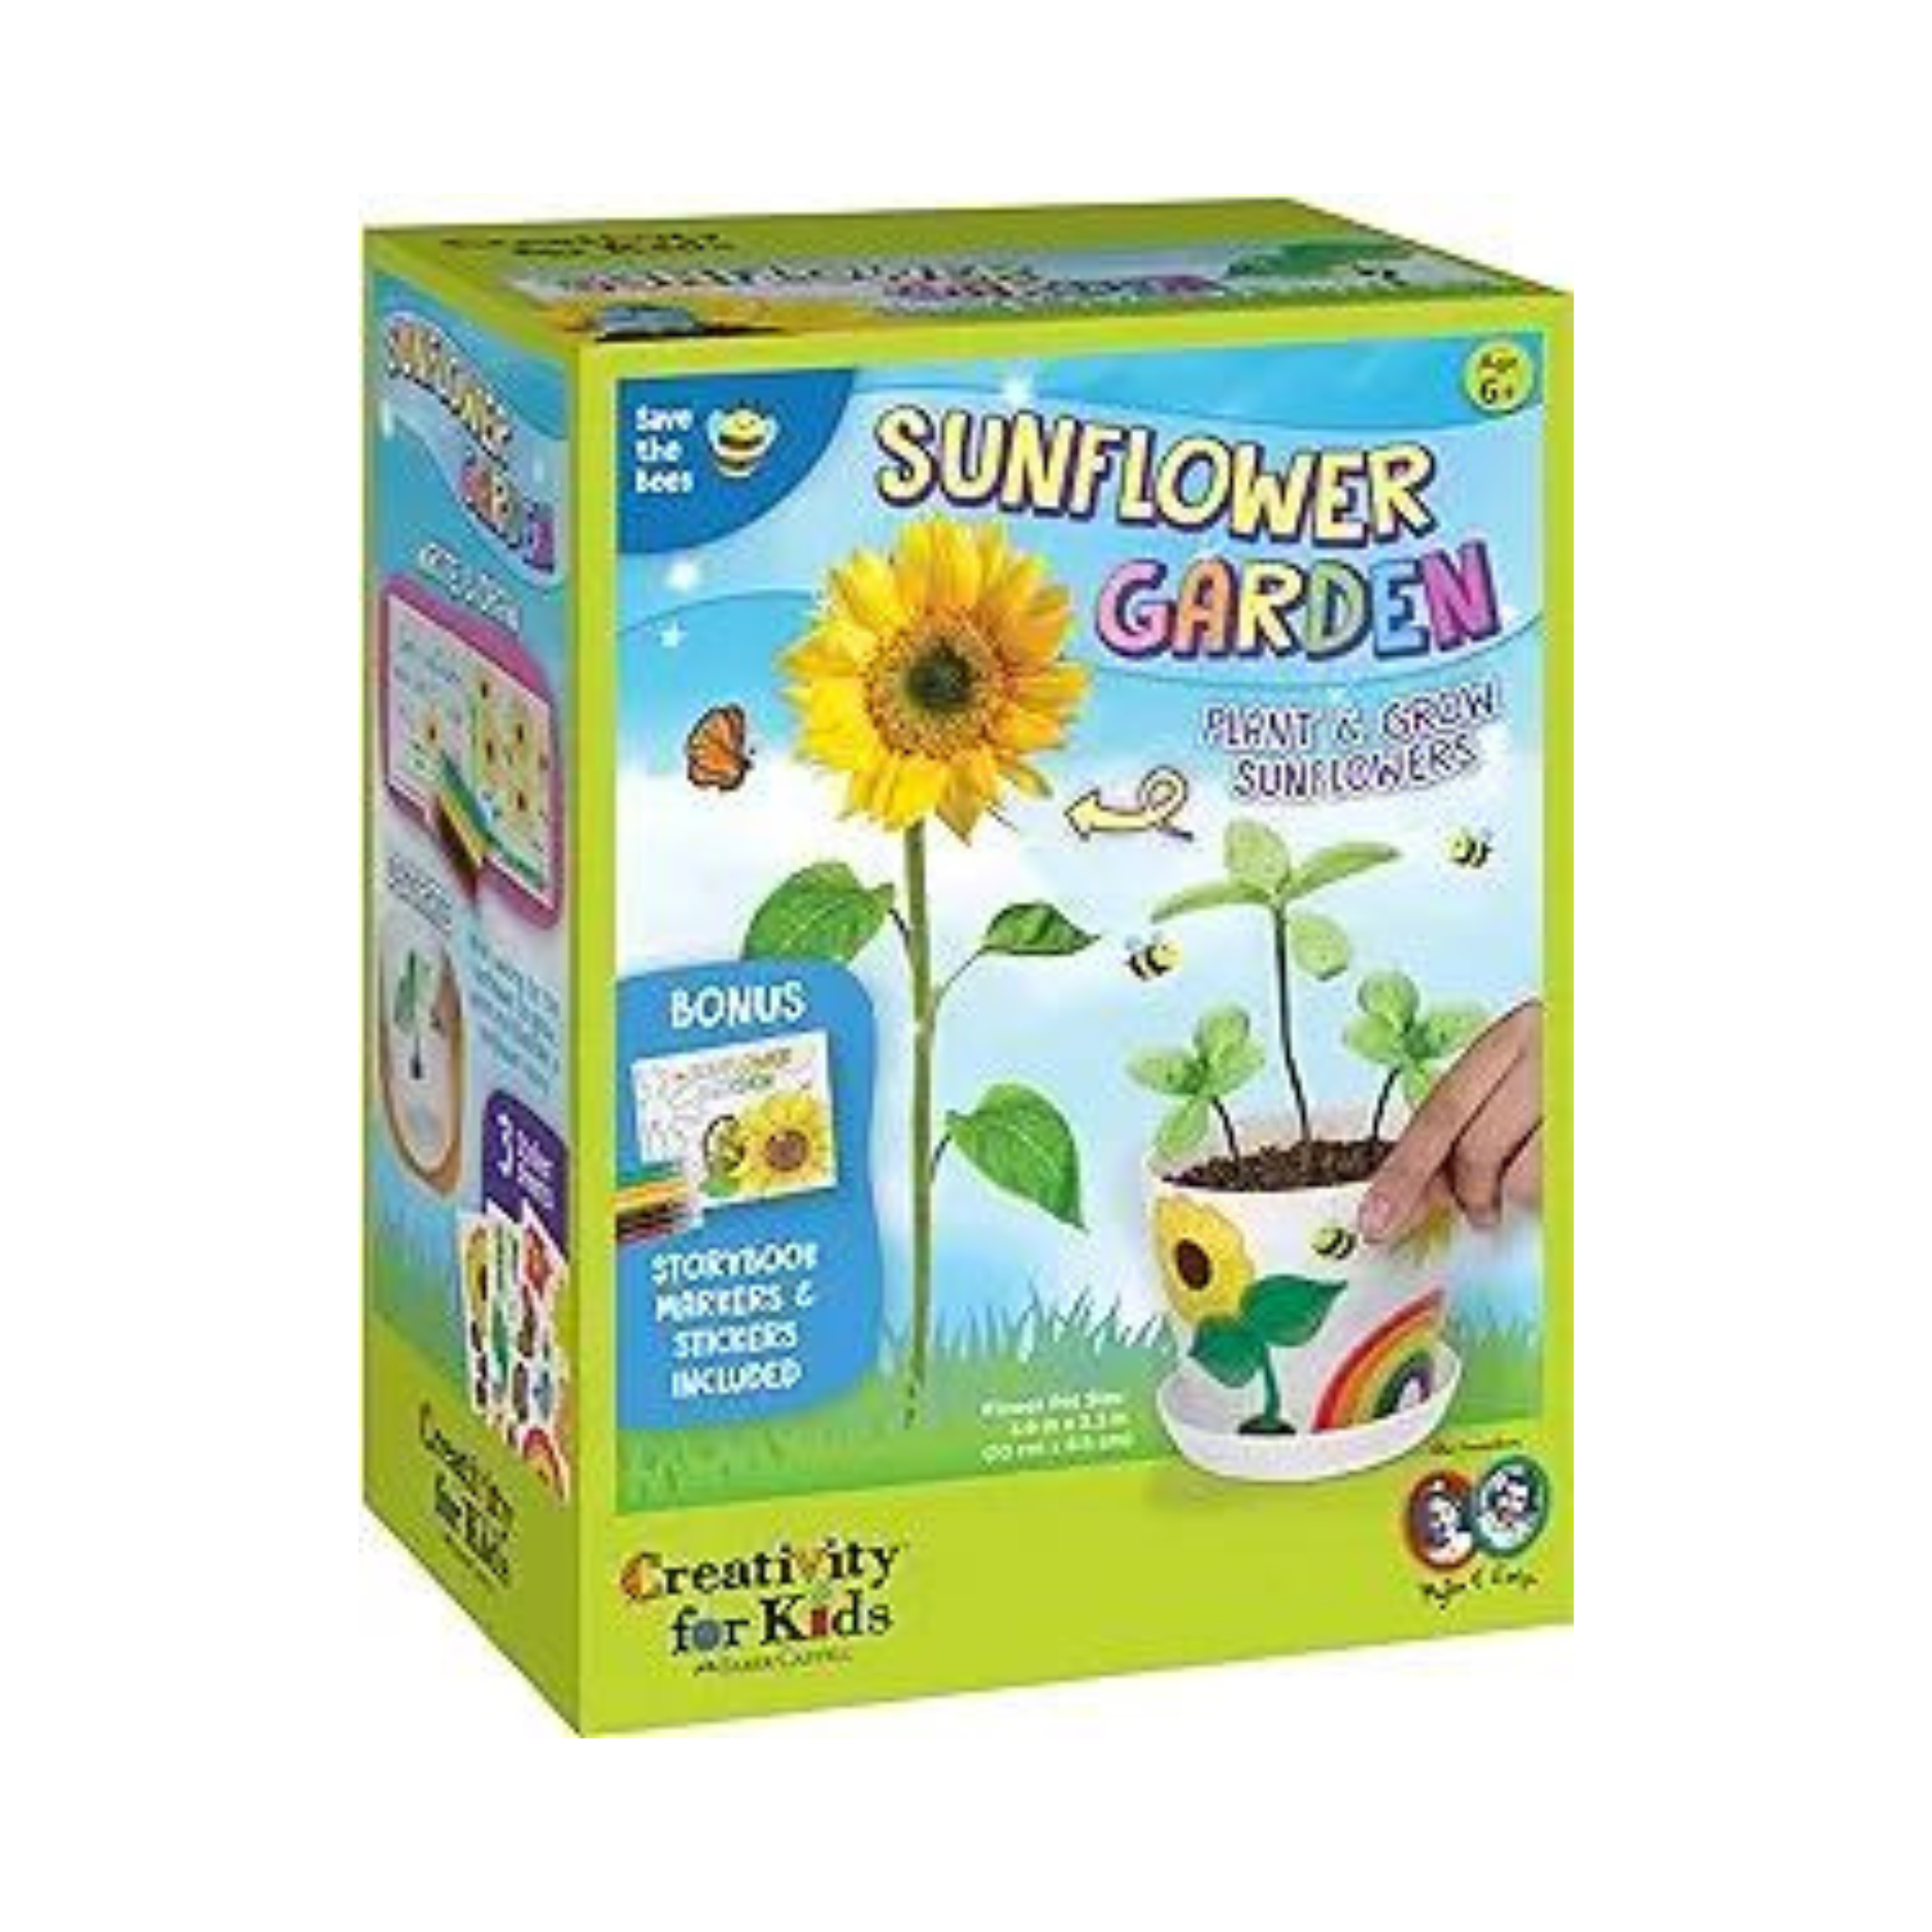 Creativity for Kids Sunflower Garden Growing Kit